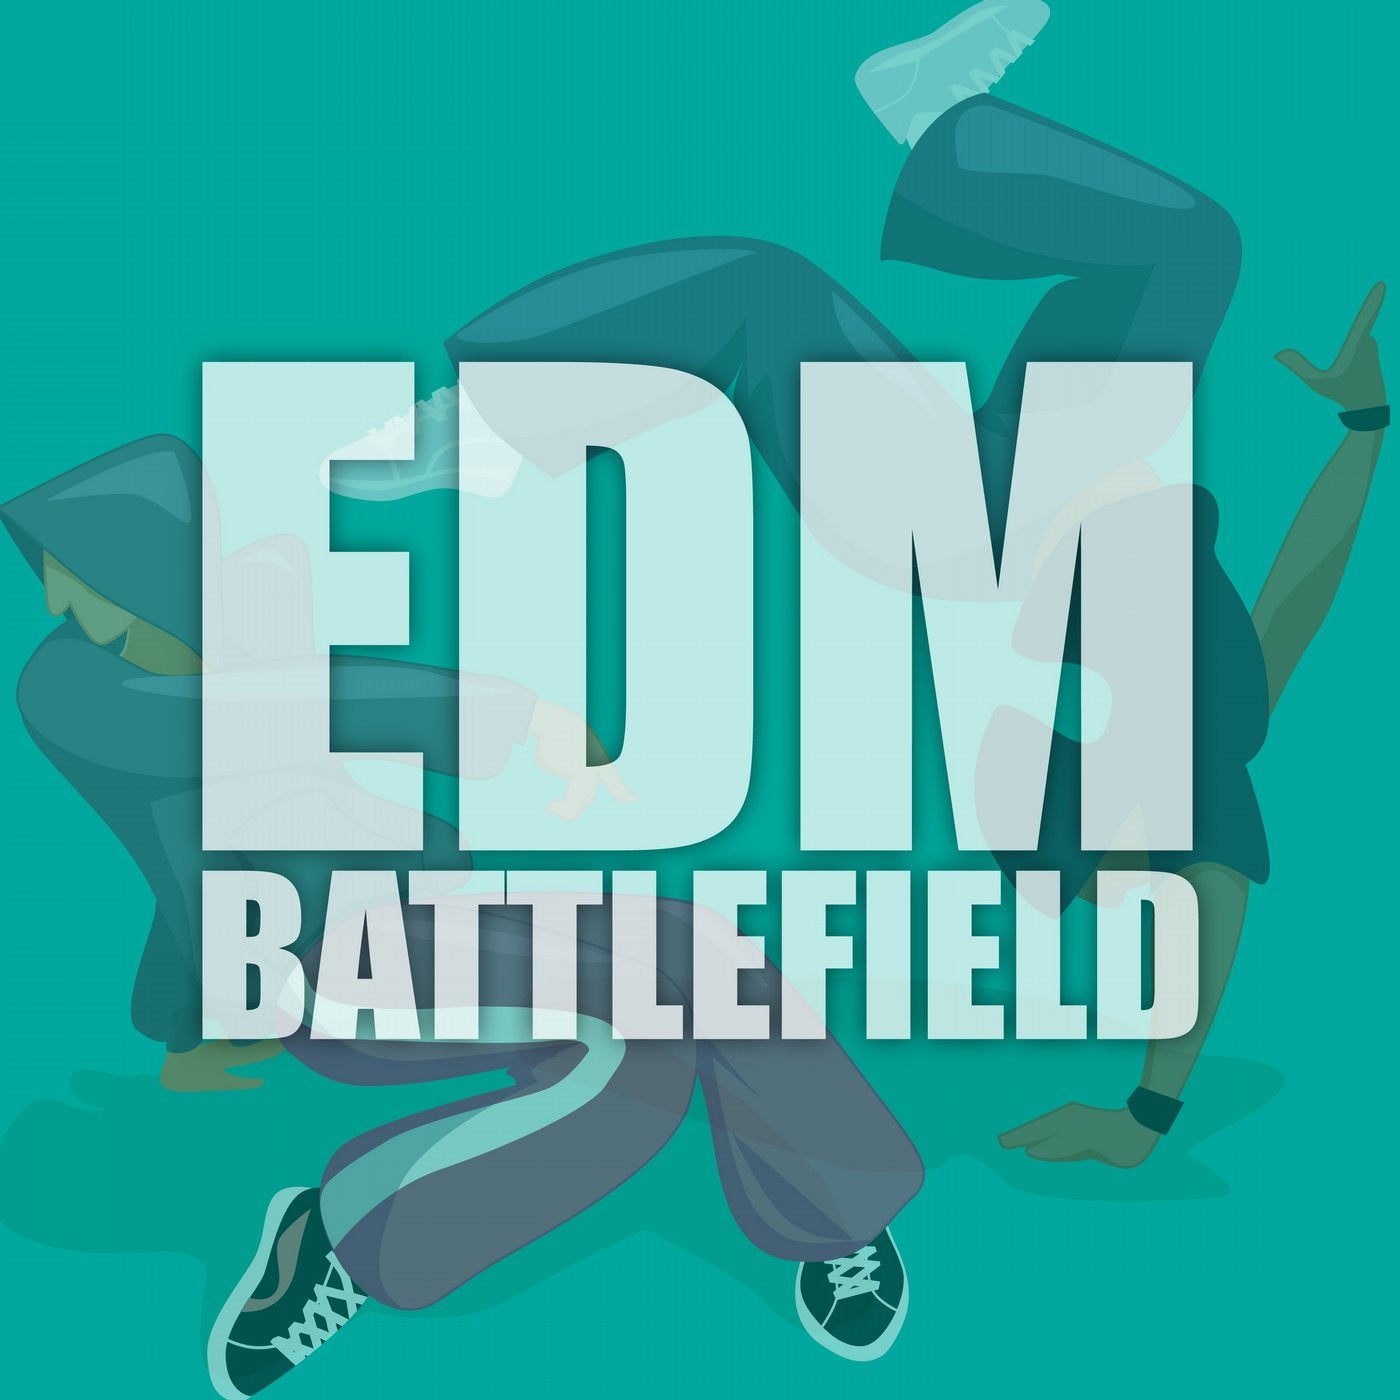 Edm Battlefield